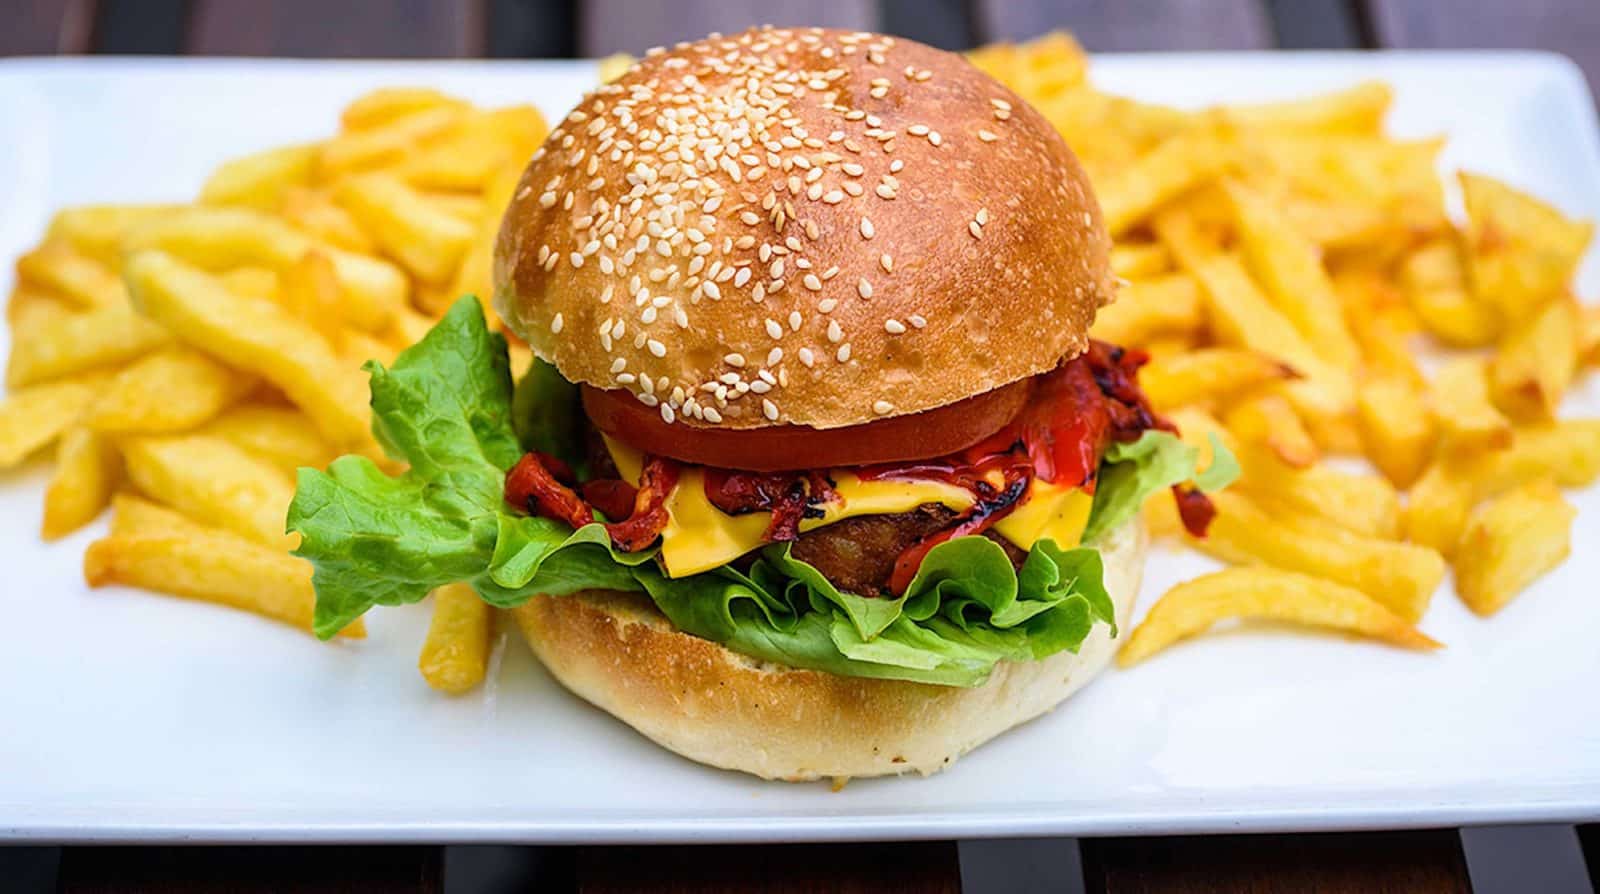 A juicy-looking vegan burger with fries at East Side Burgers restaurant in Paris.